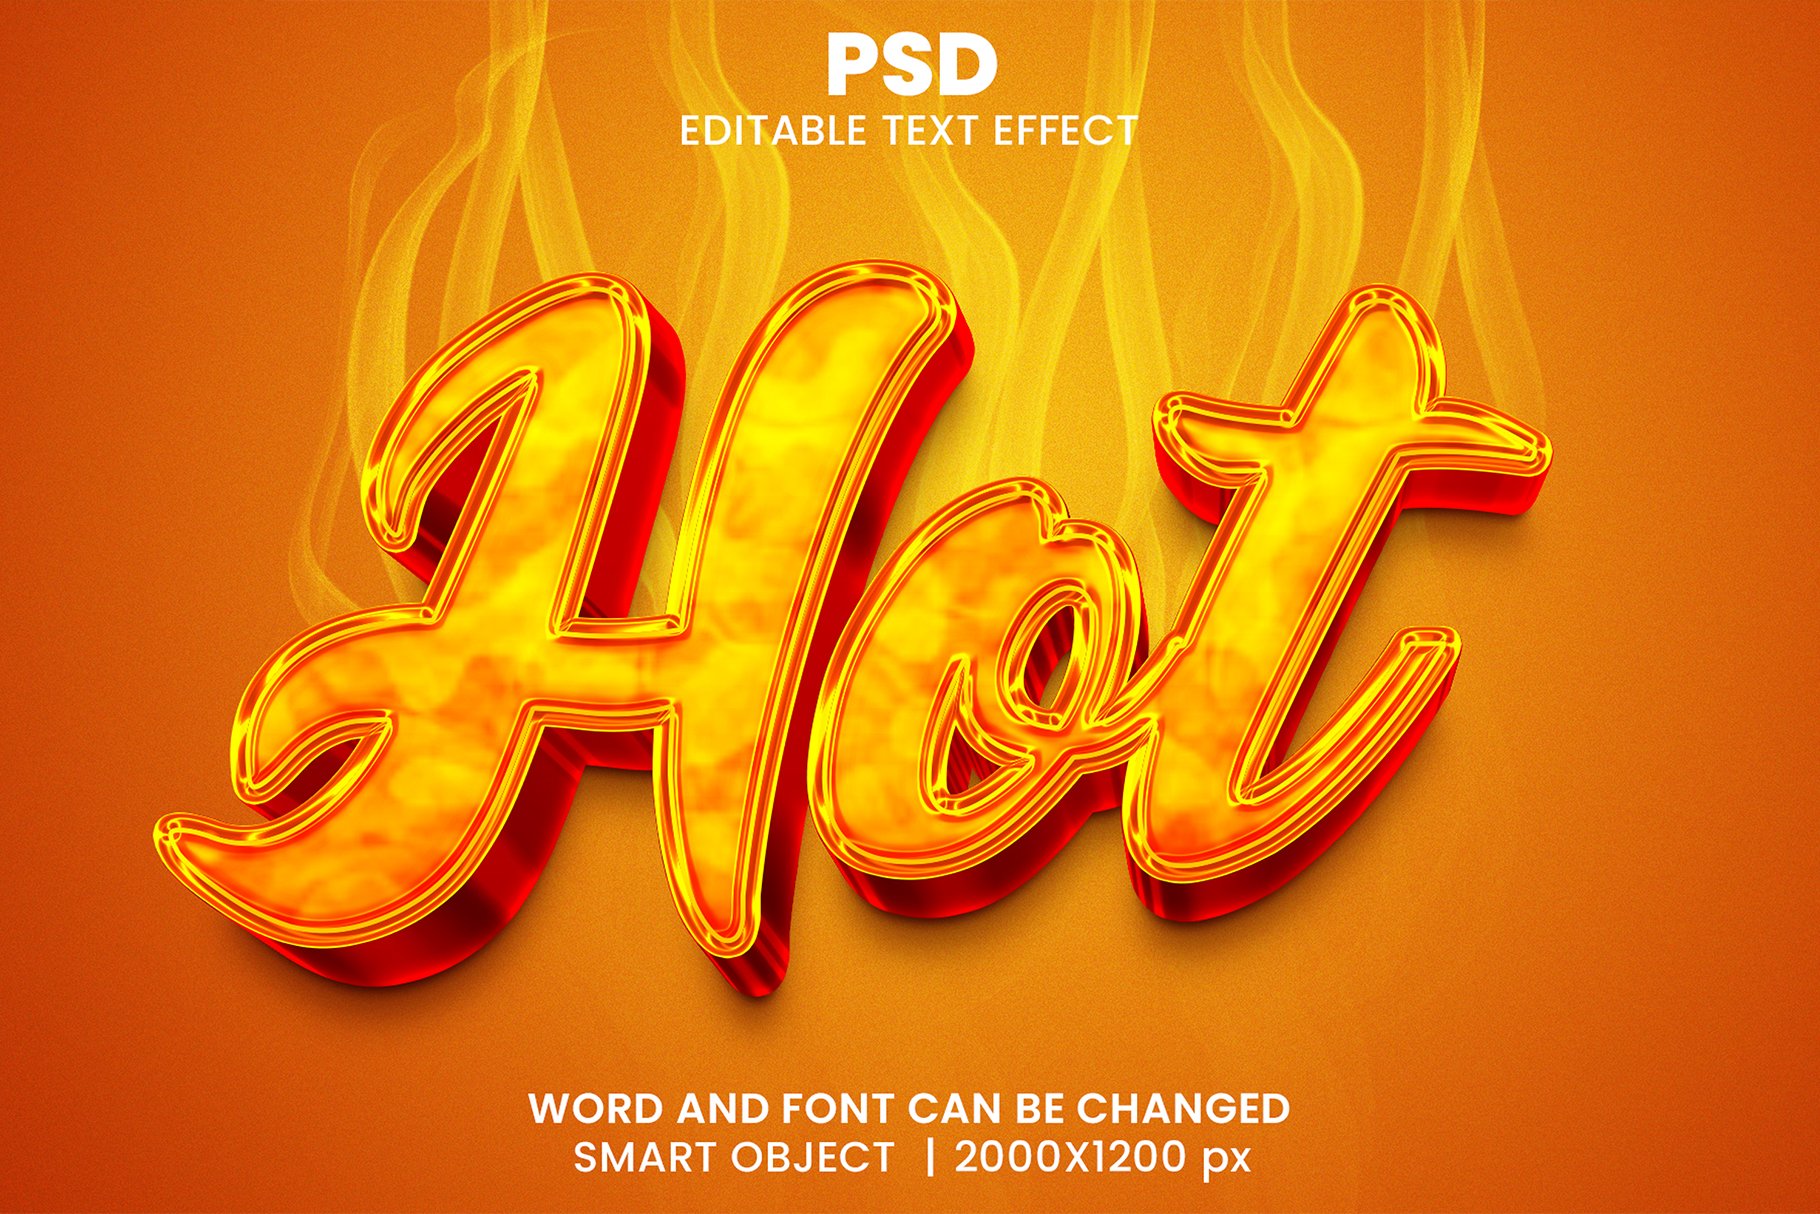 Hot 3d Editable Psd Text Effectcover image.